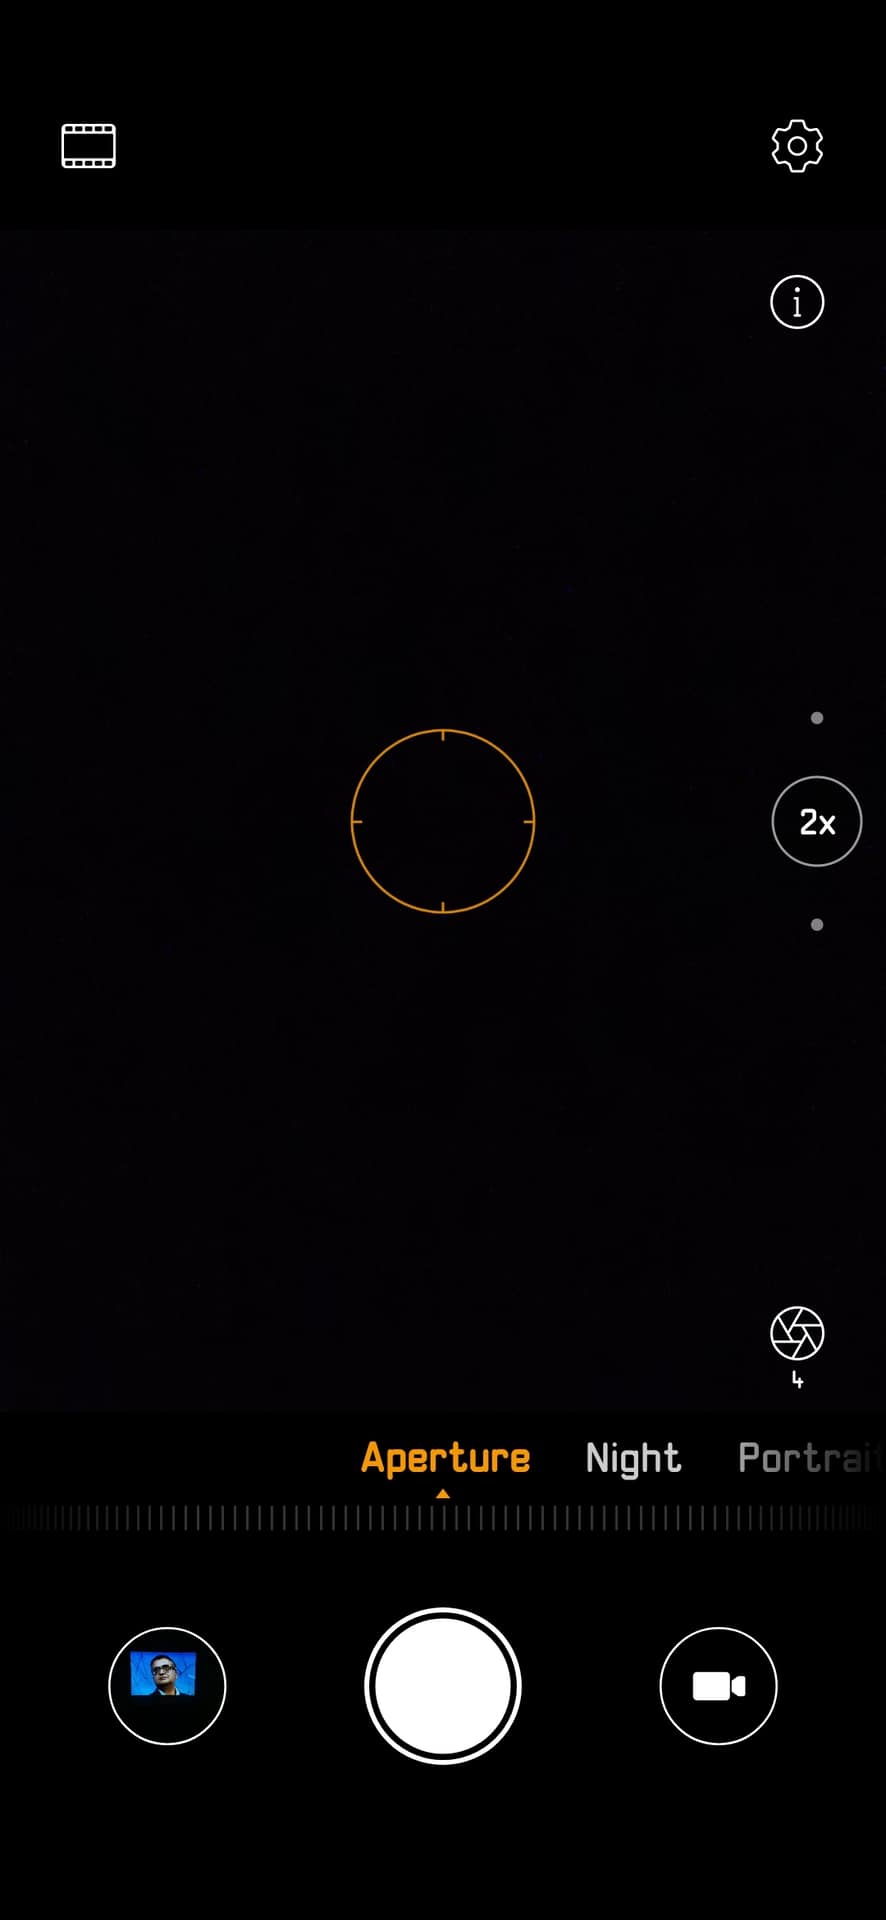 Huawei P30 Pro camera app Aperture mode